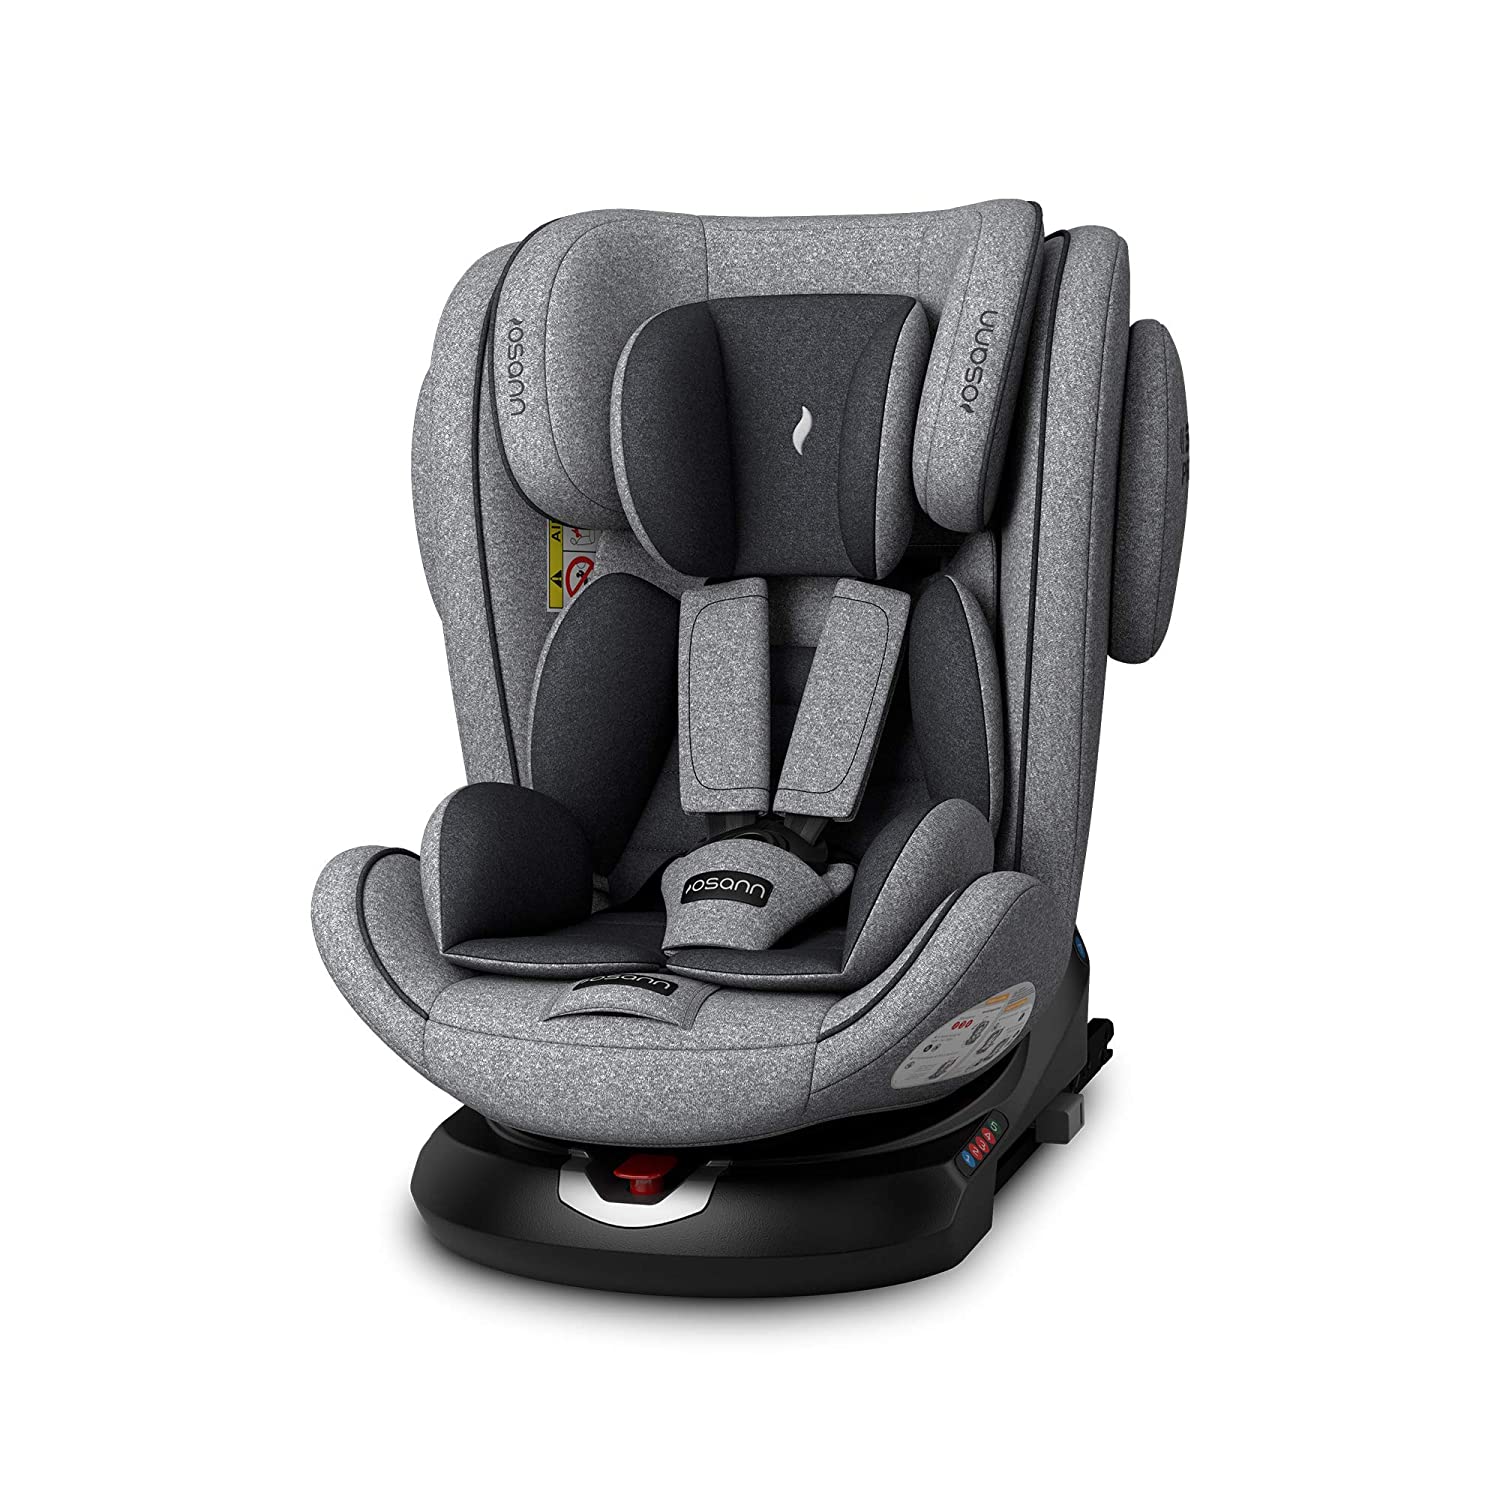 Osann ENO360 Reboarder Child Car Seat Group, Ages 0+/1/2/3 (0-36 kg)